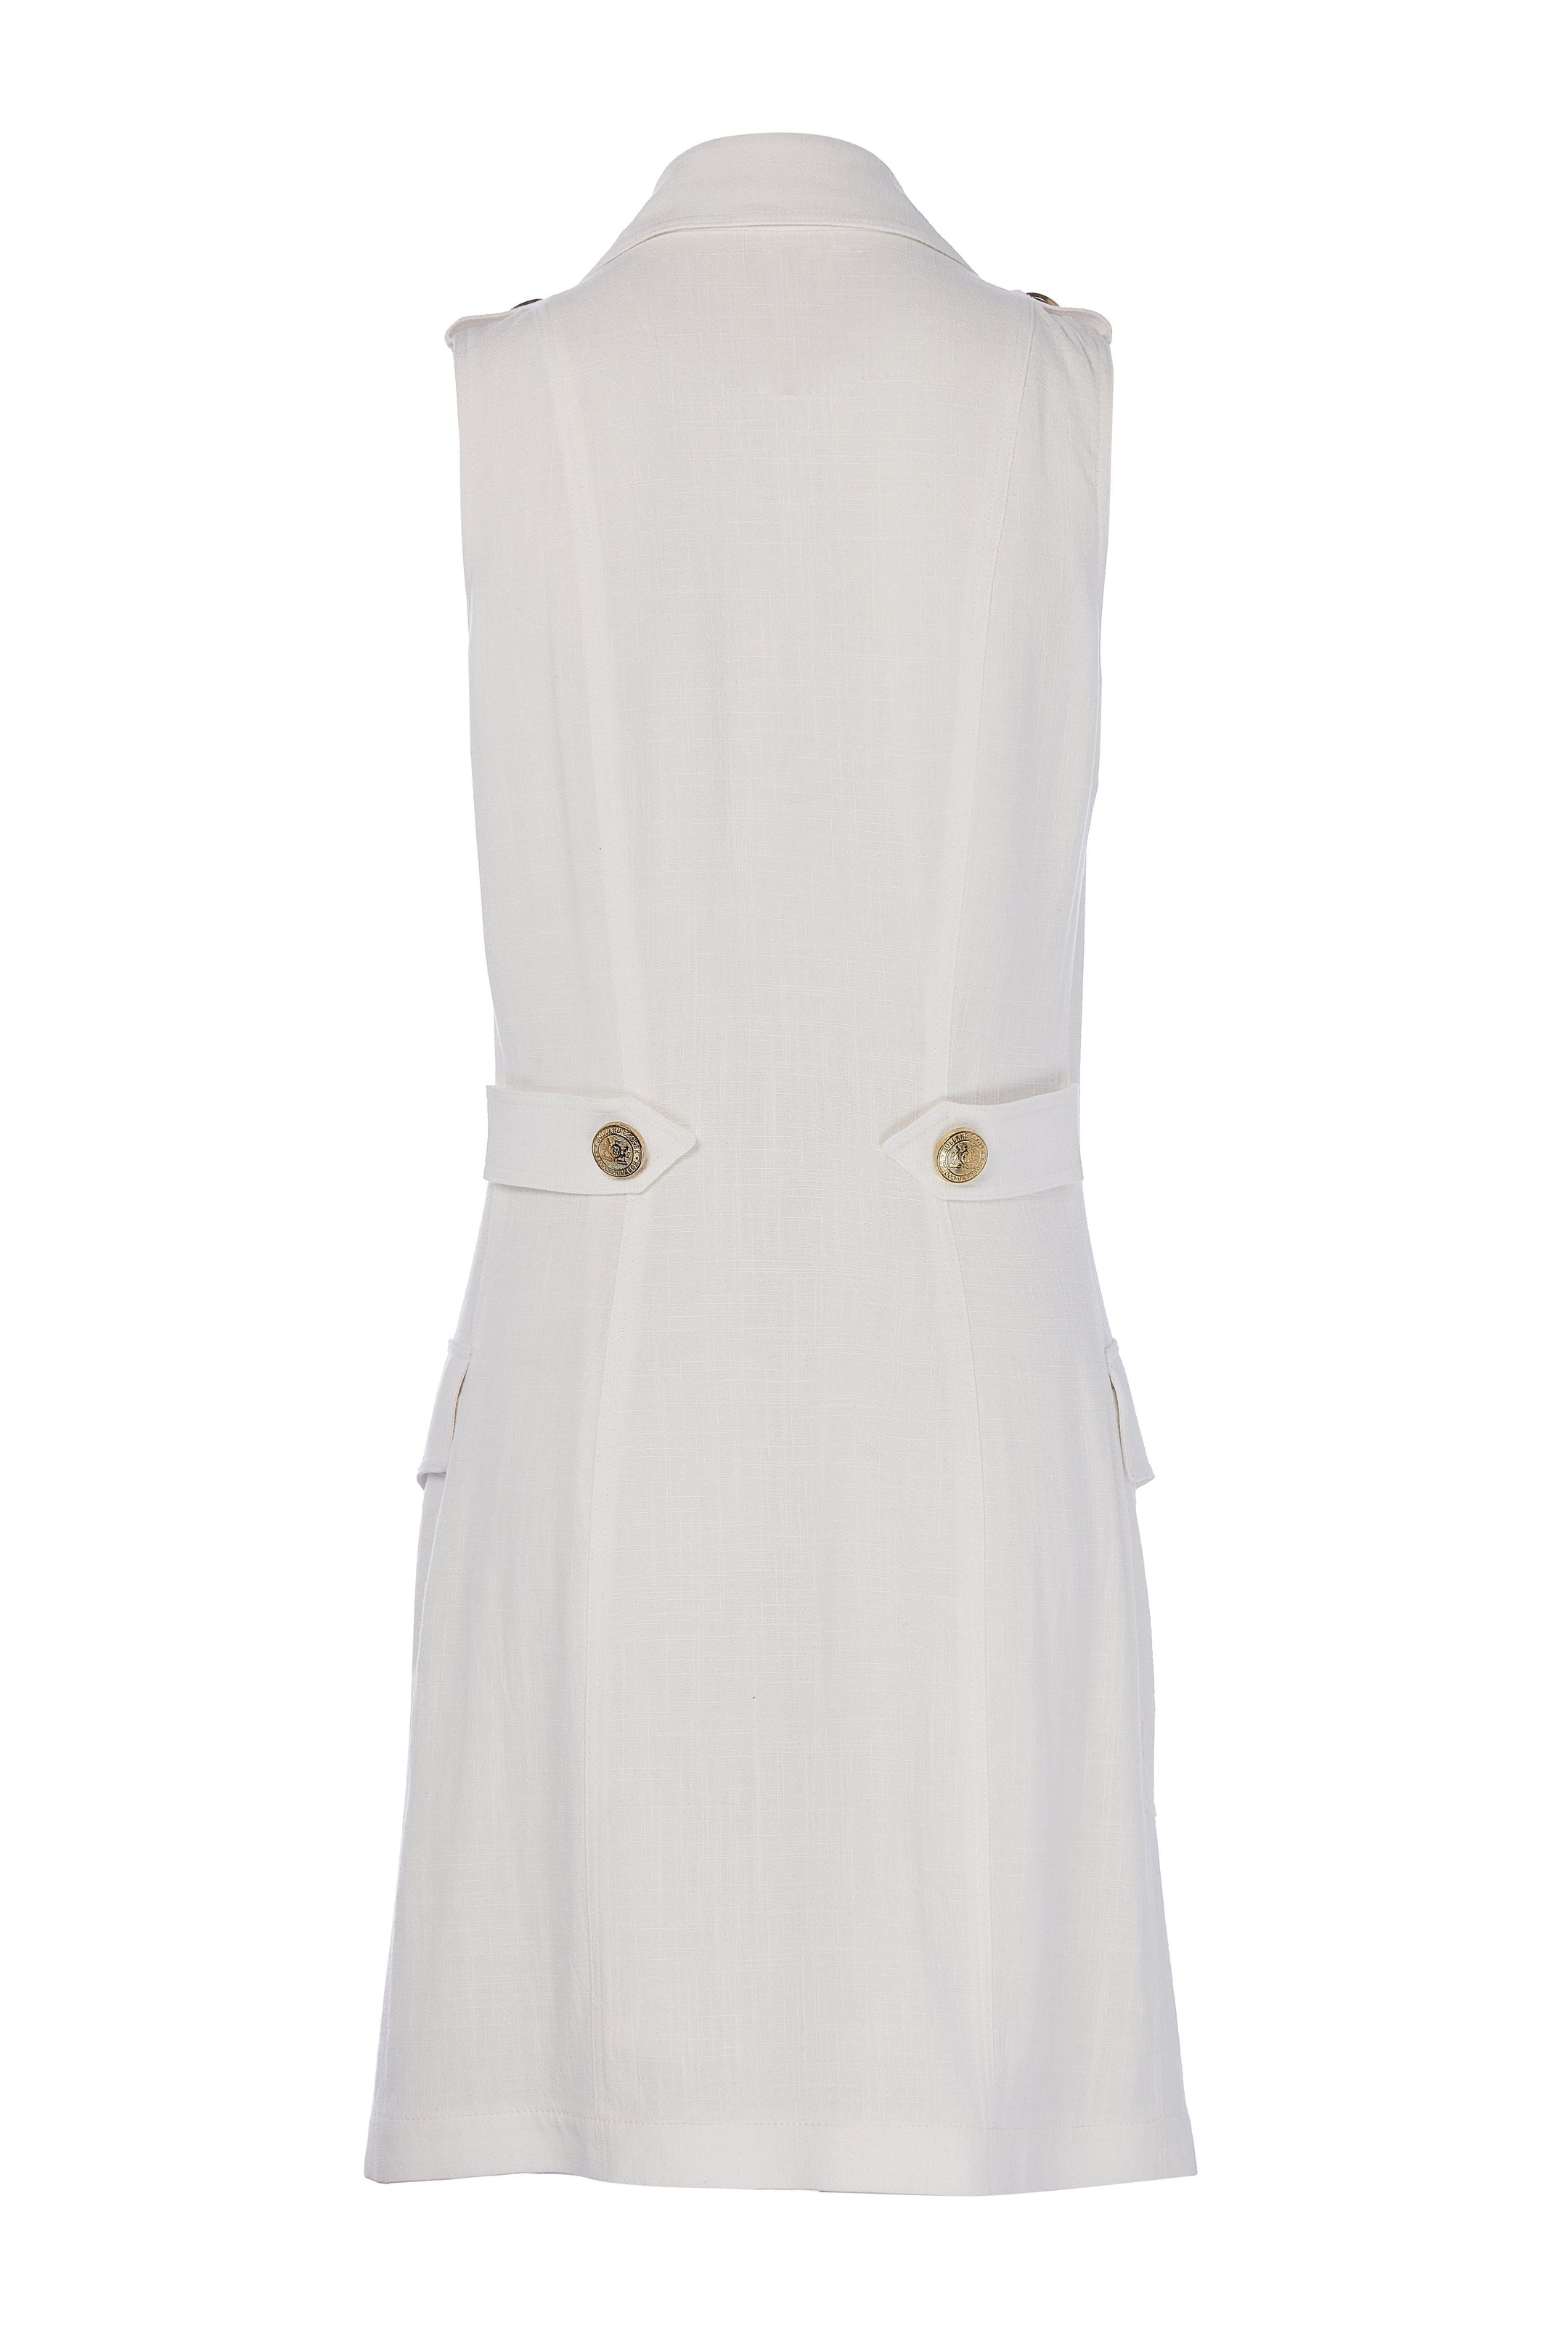 Chelsea Dress (Oyster Linen) – Holland Cooper